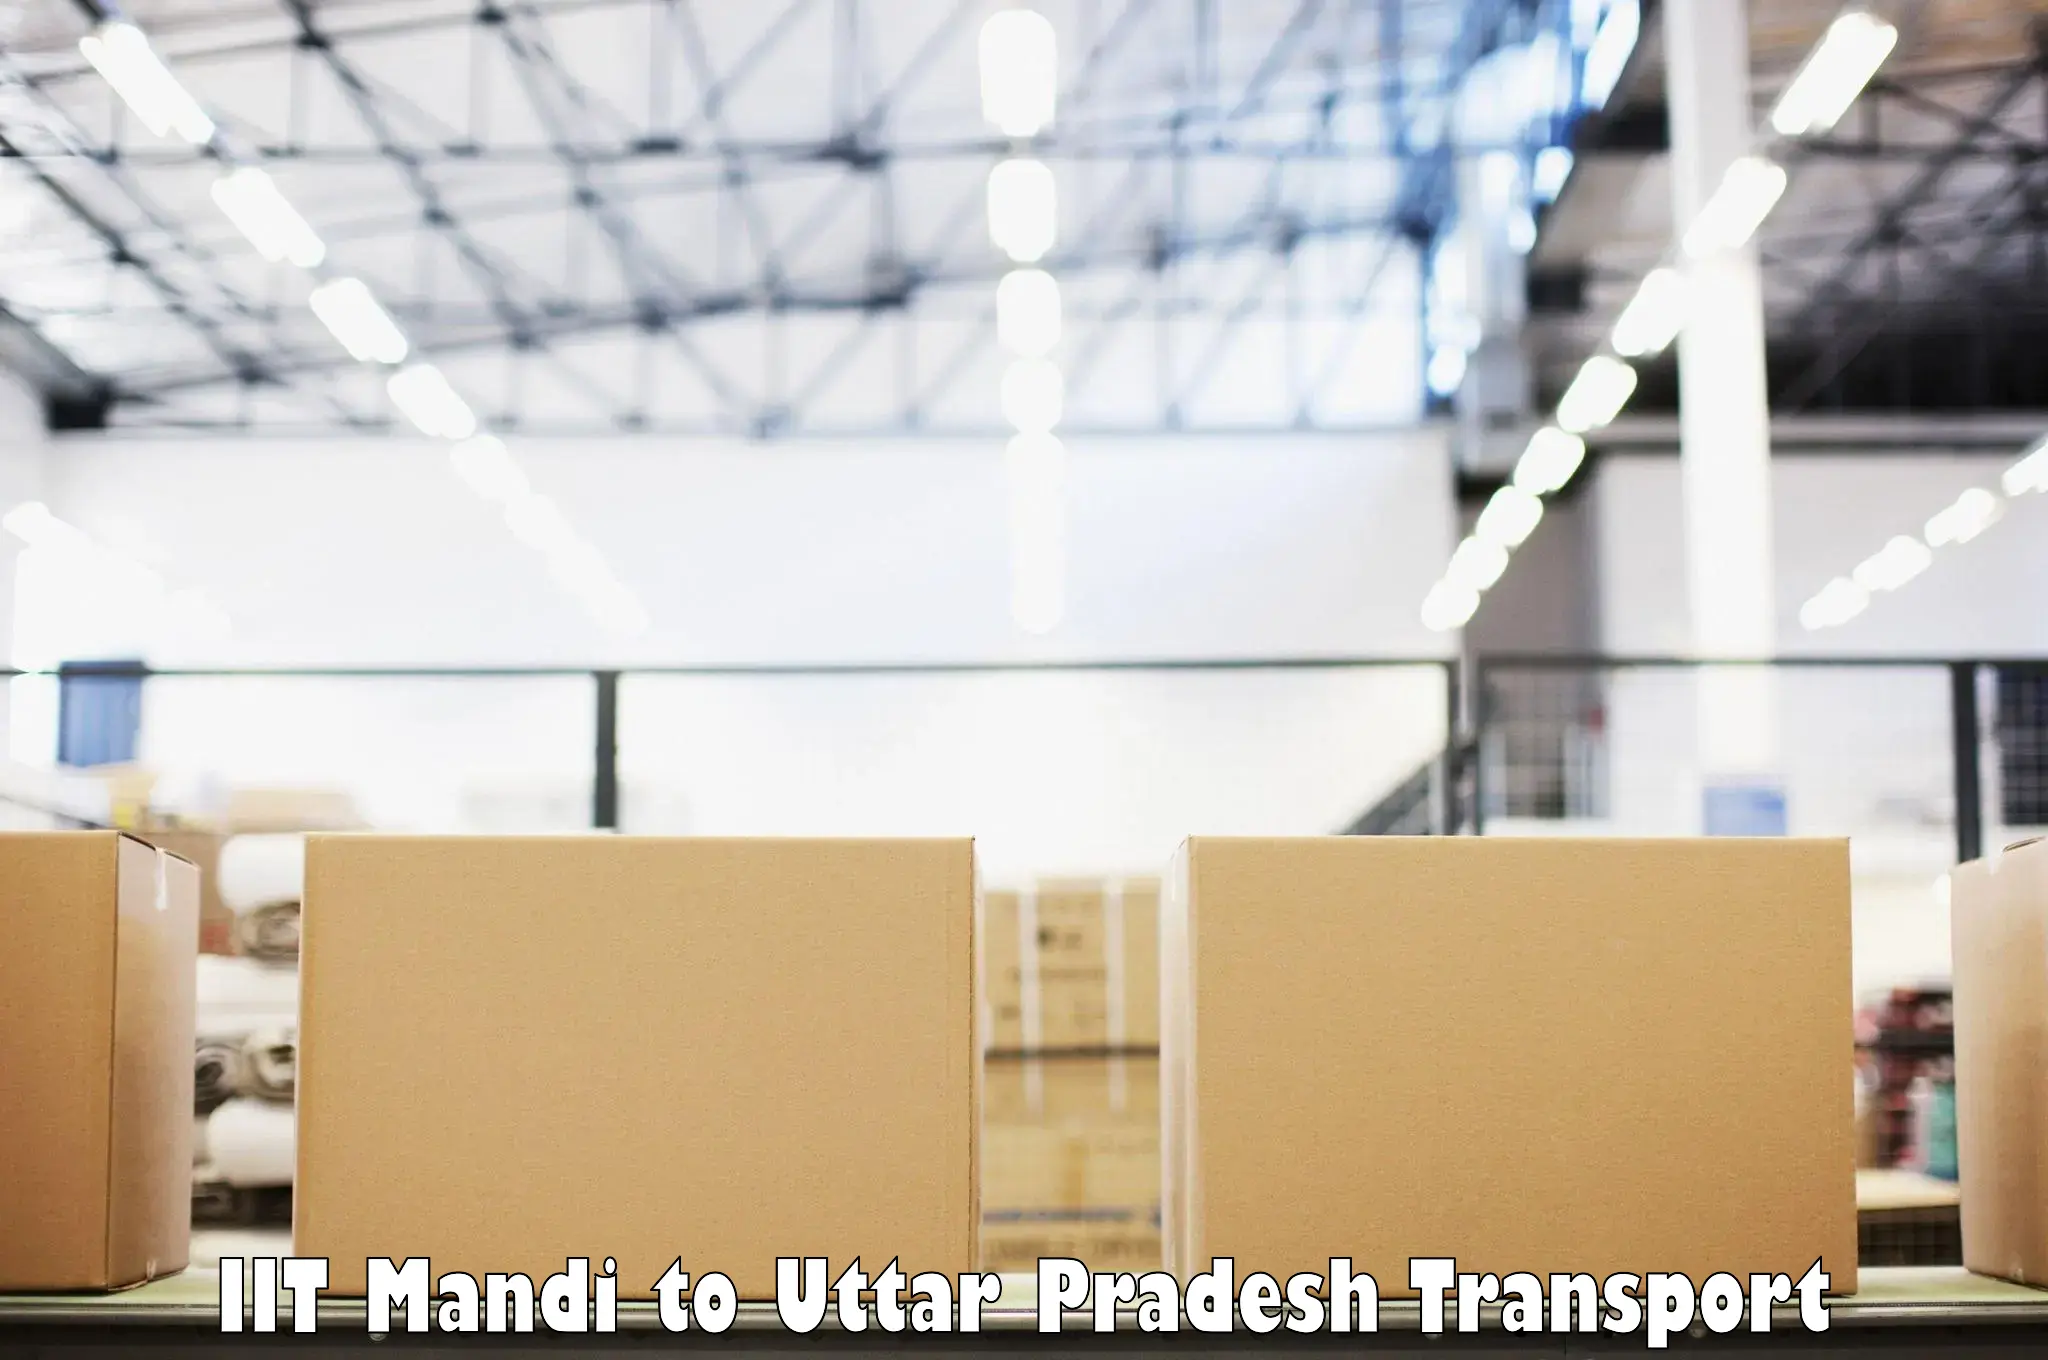 Daily parcel service transport IIT Mandi to Pilkhuwa